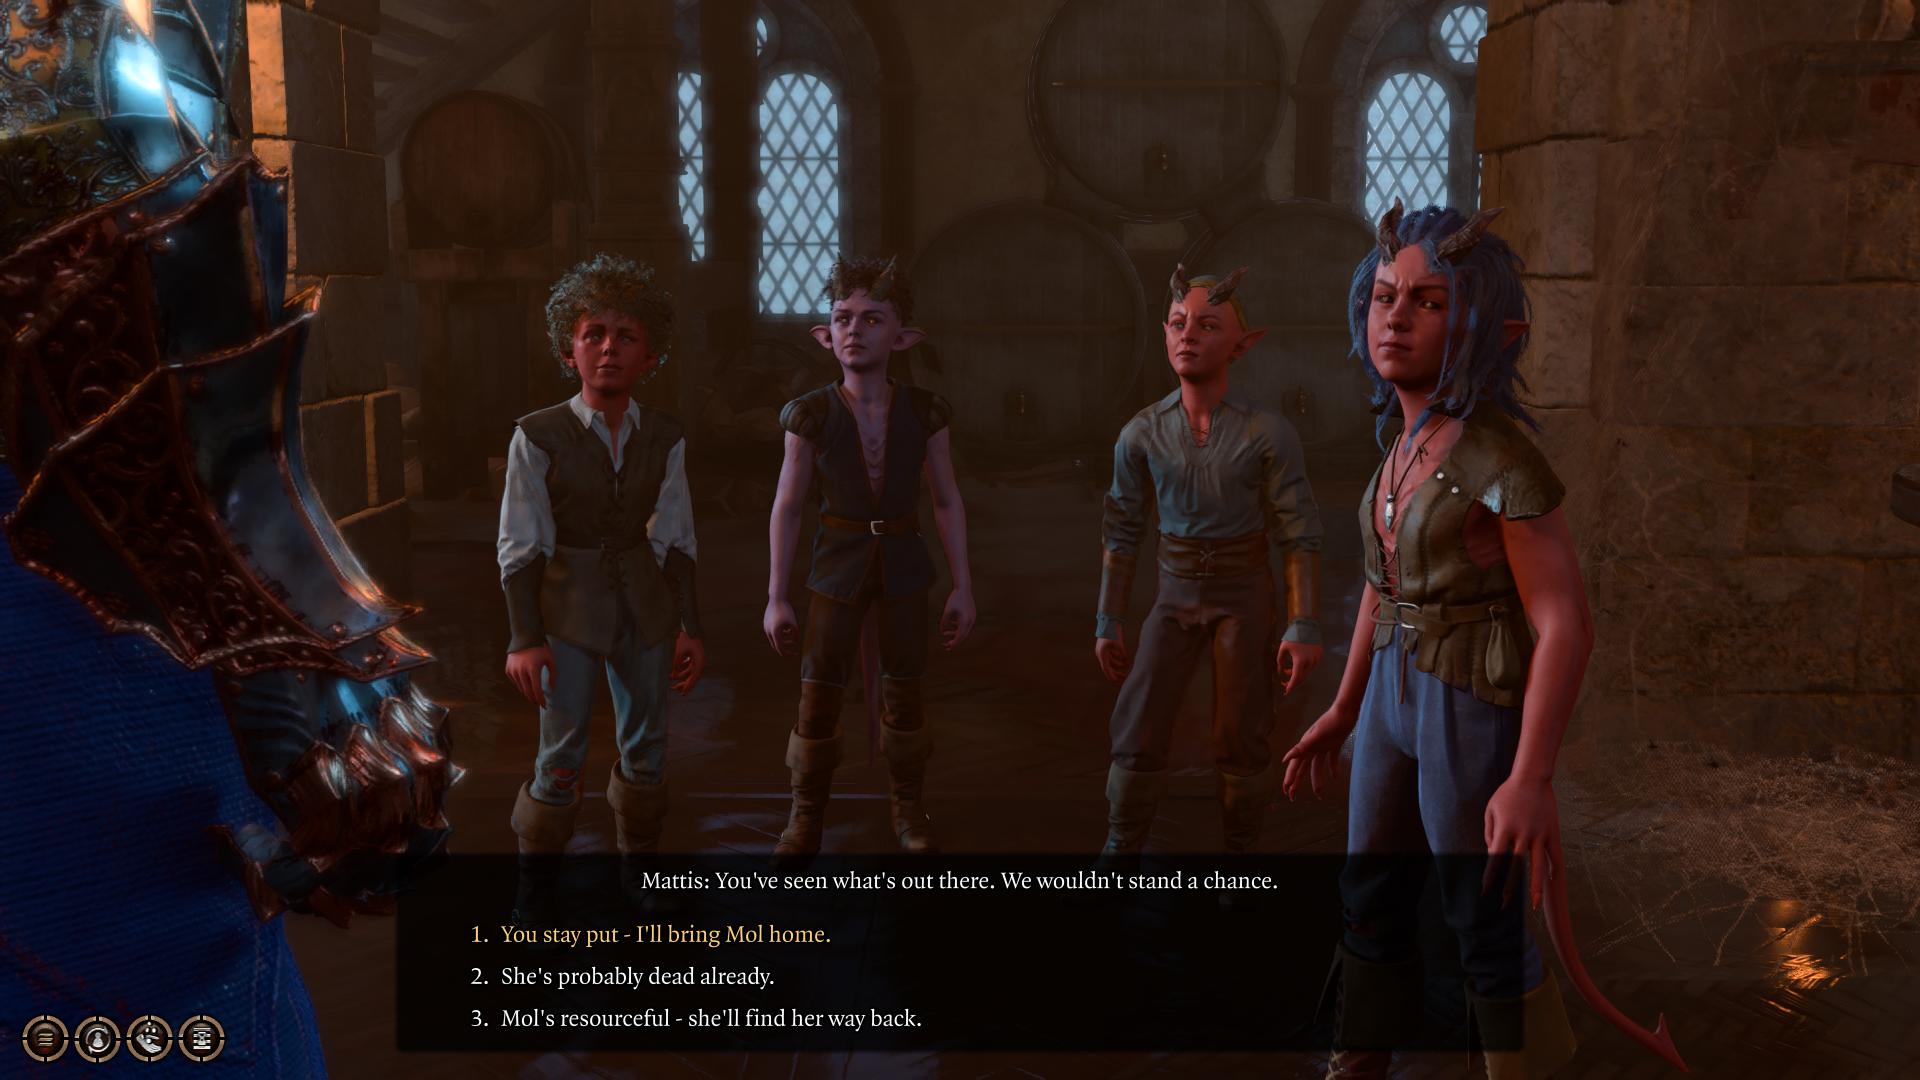 The player confronts some Tiefling children in Baldur’s Gate 3